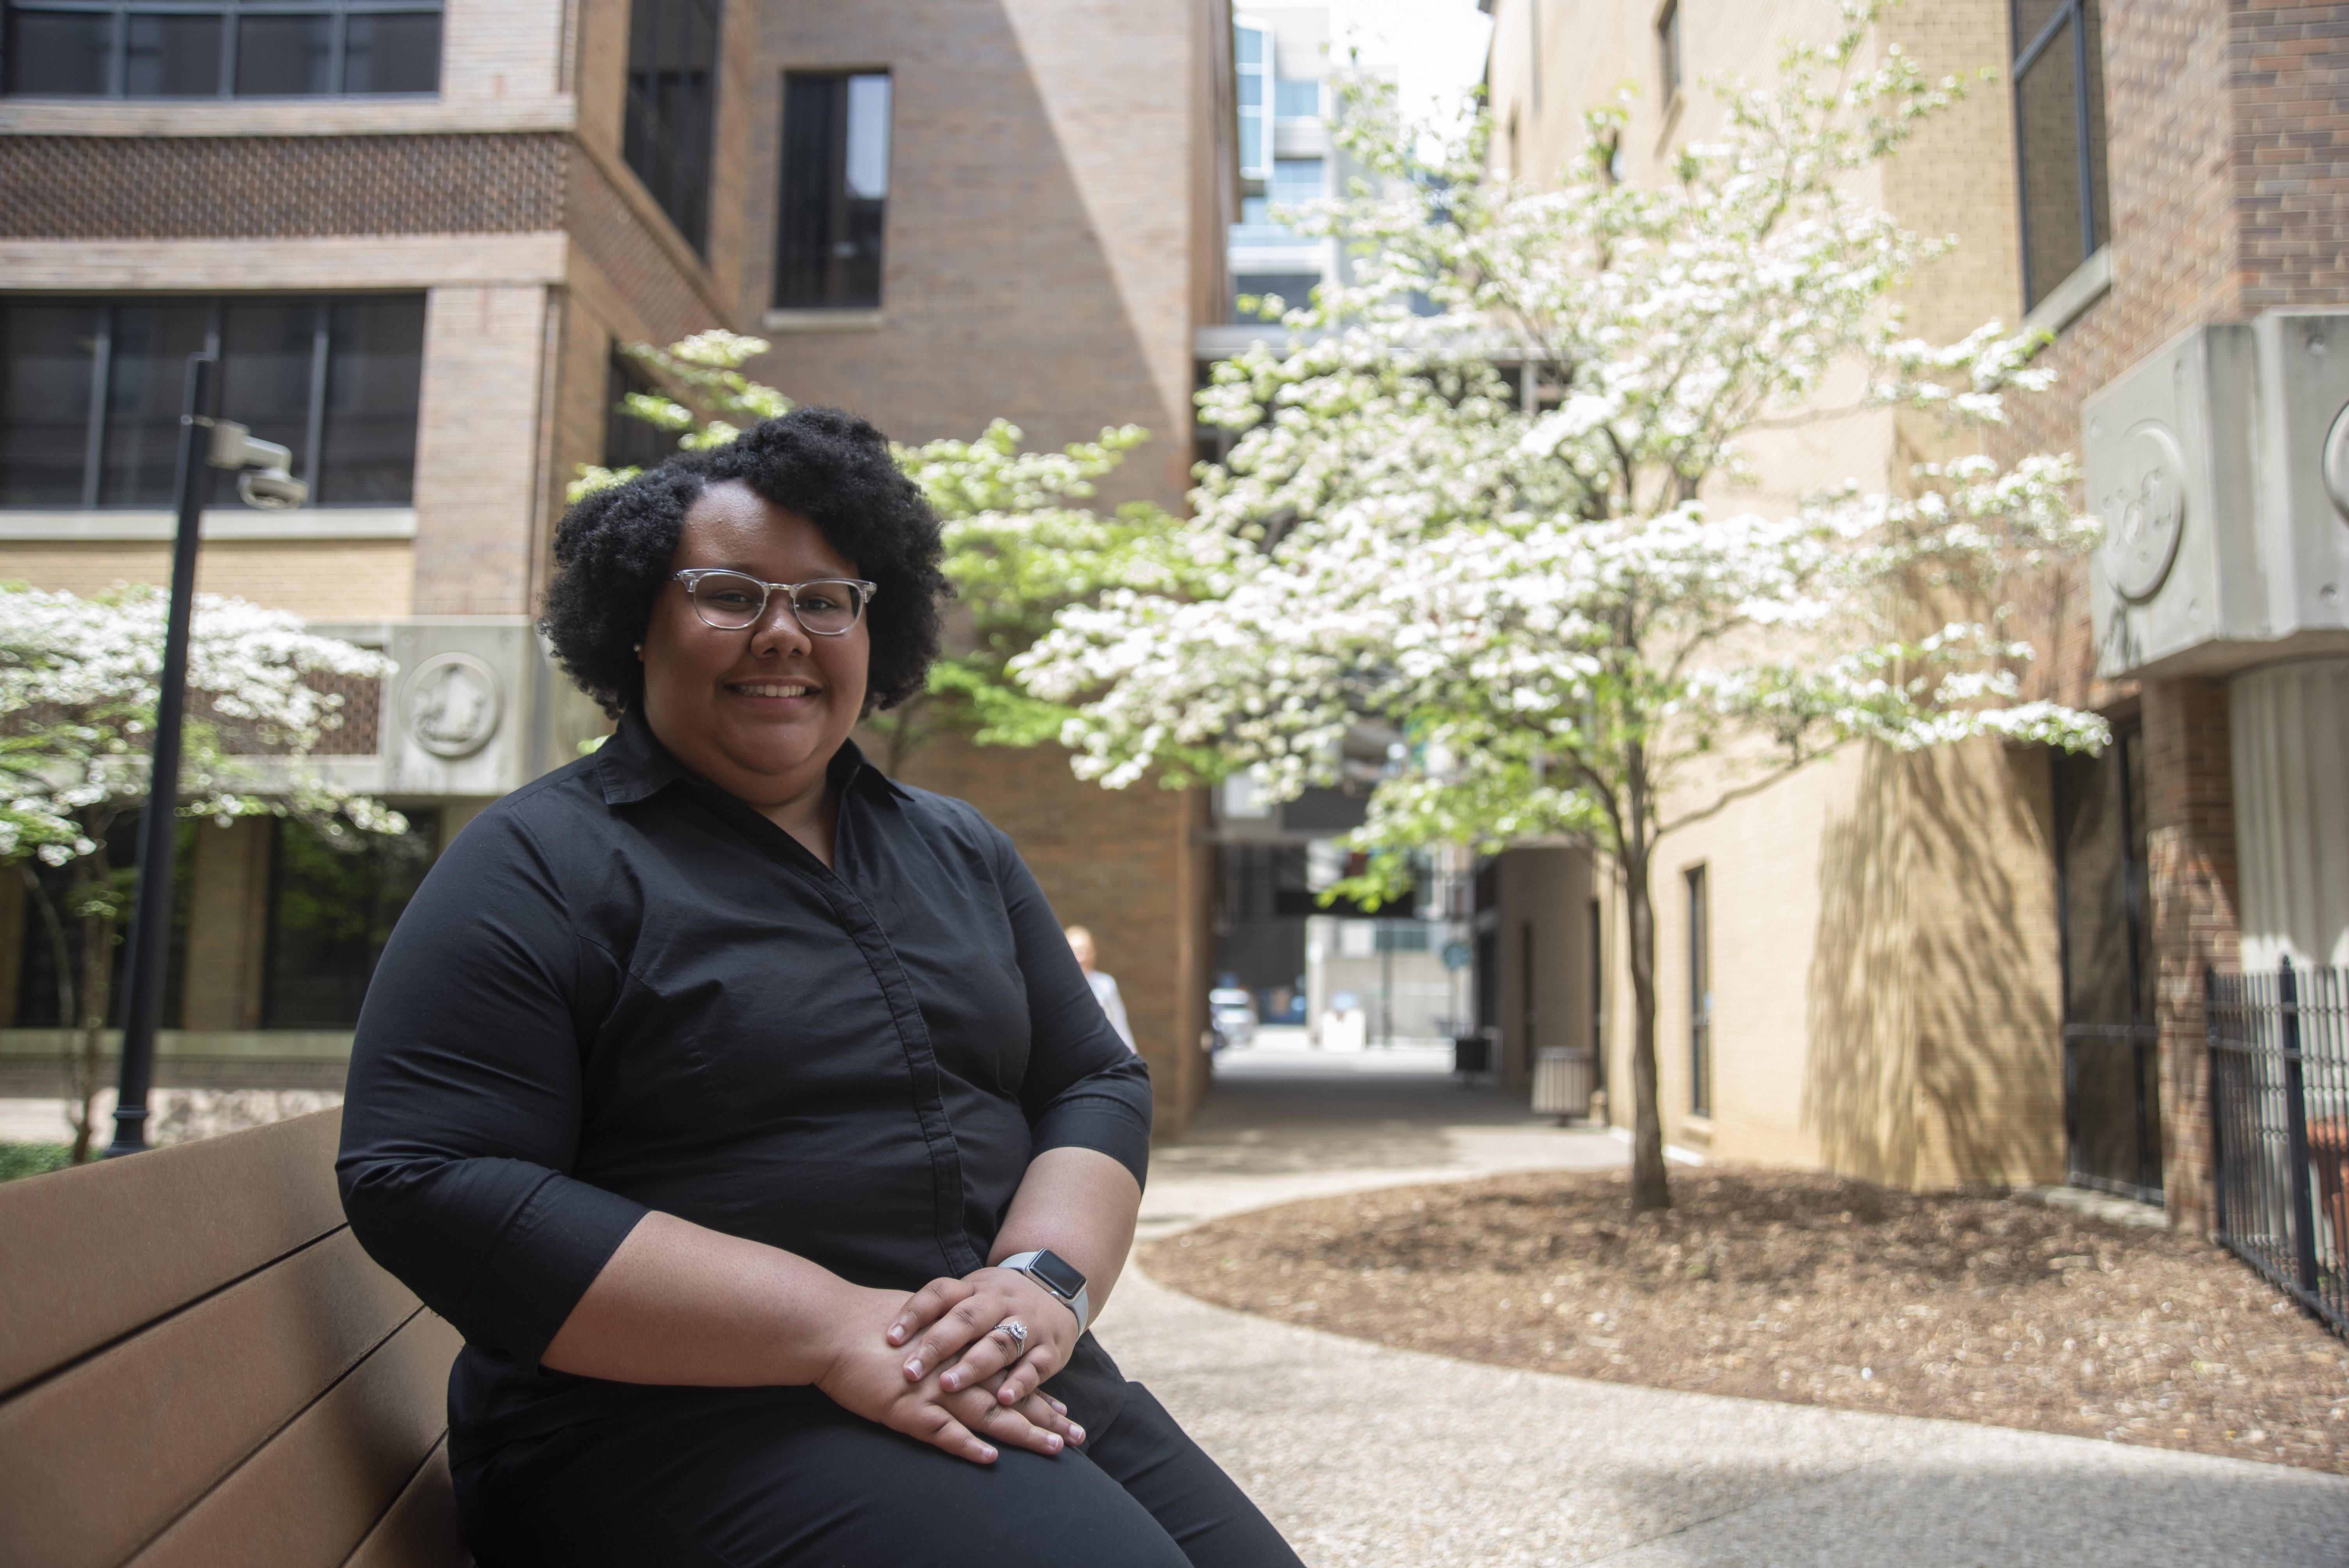 PhD student receives National Black Nurses Association scholarship